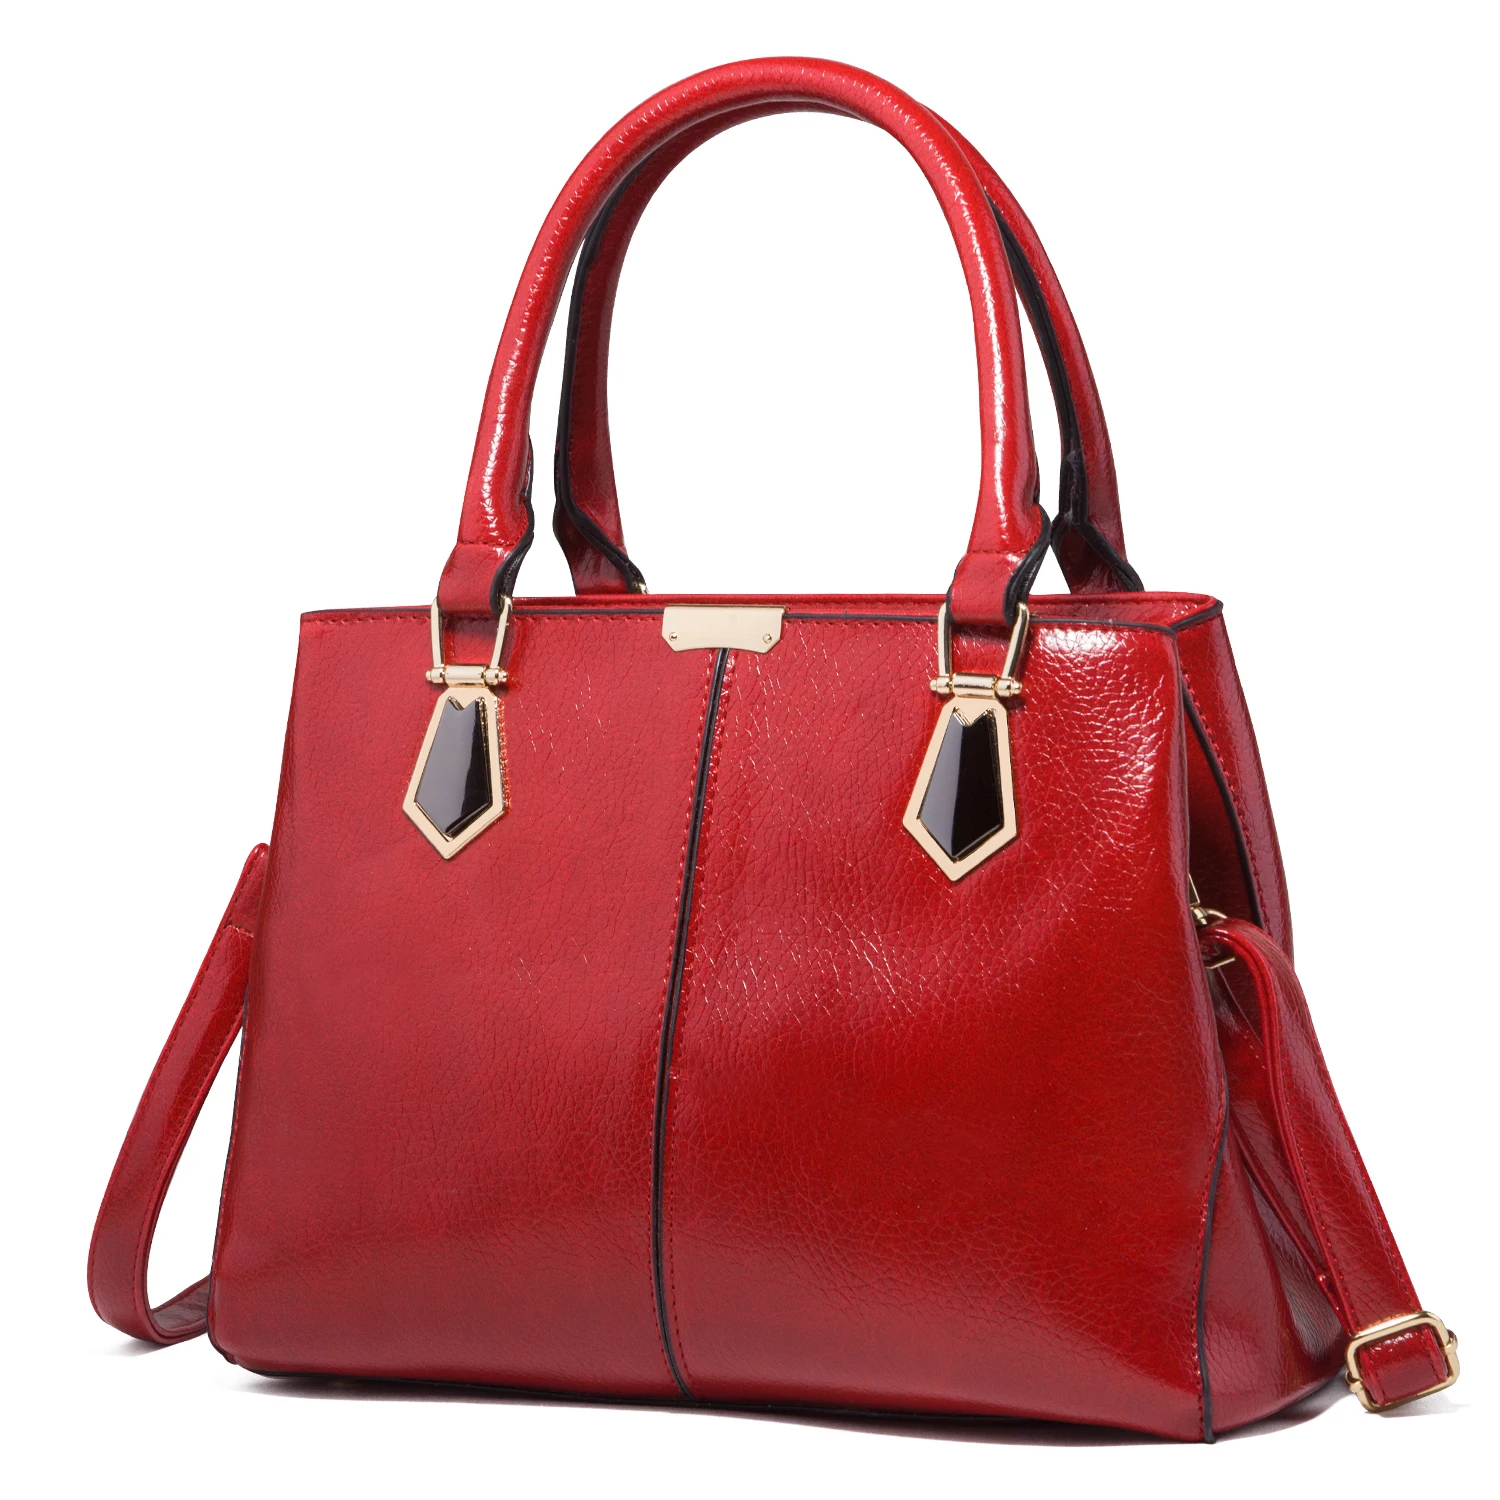 MK latest handbags